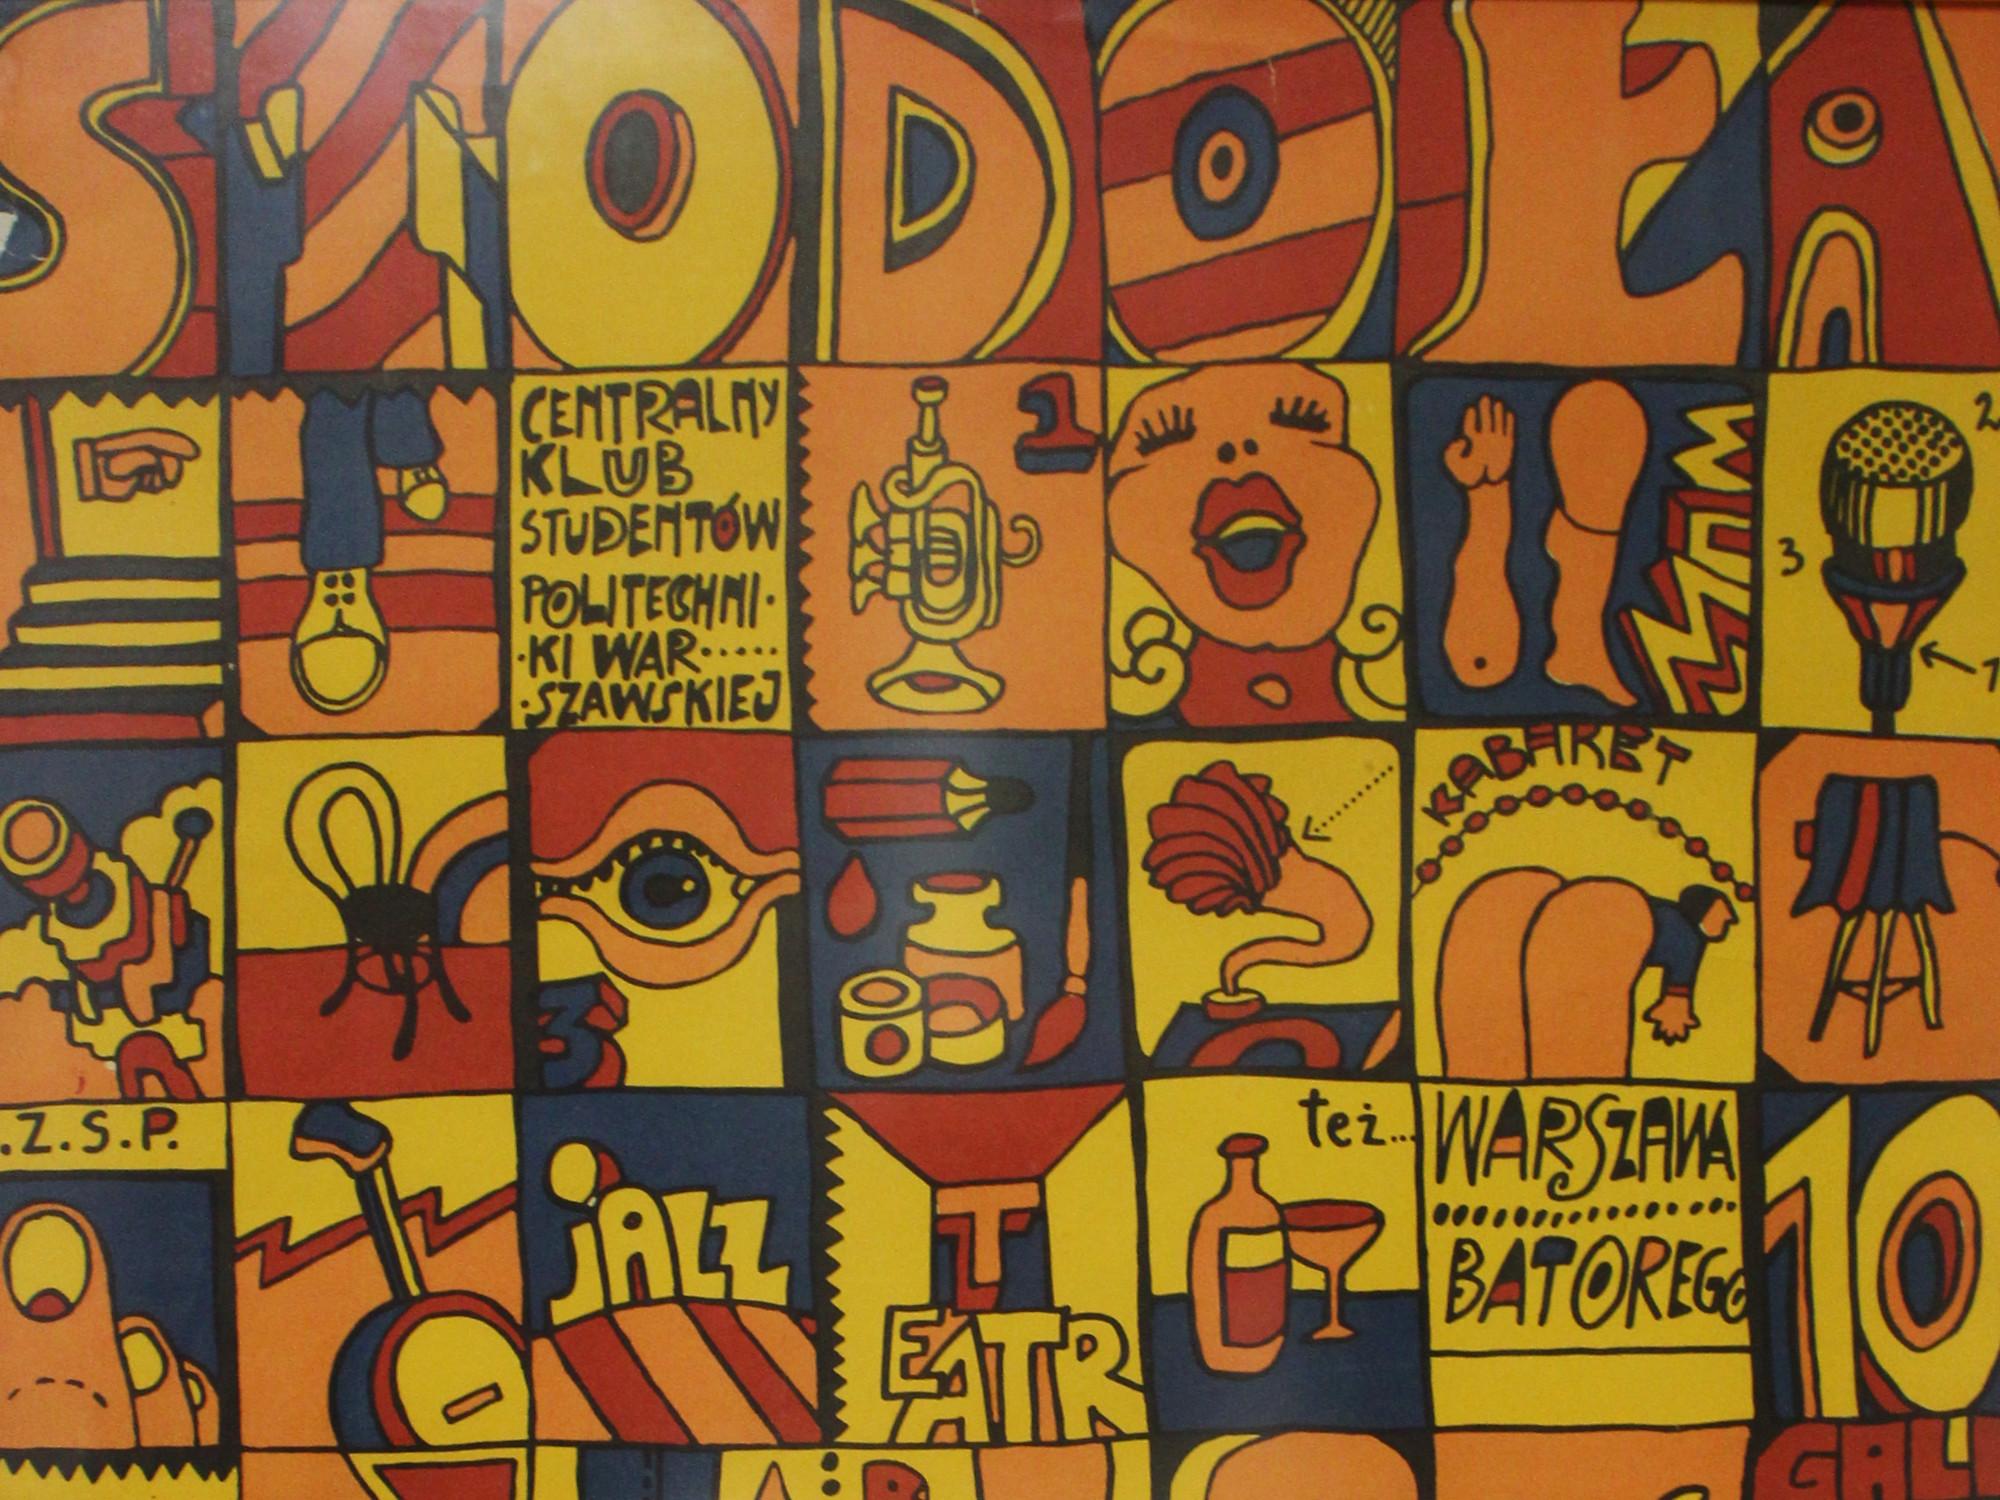 Stodola plakát - 1970-es évek körüli (PG-0275) - Pápai Galéria